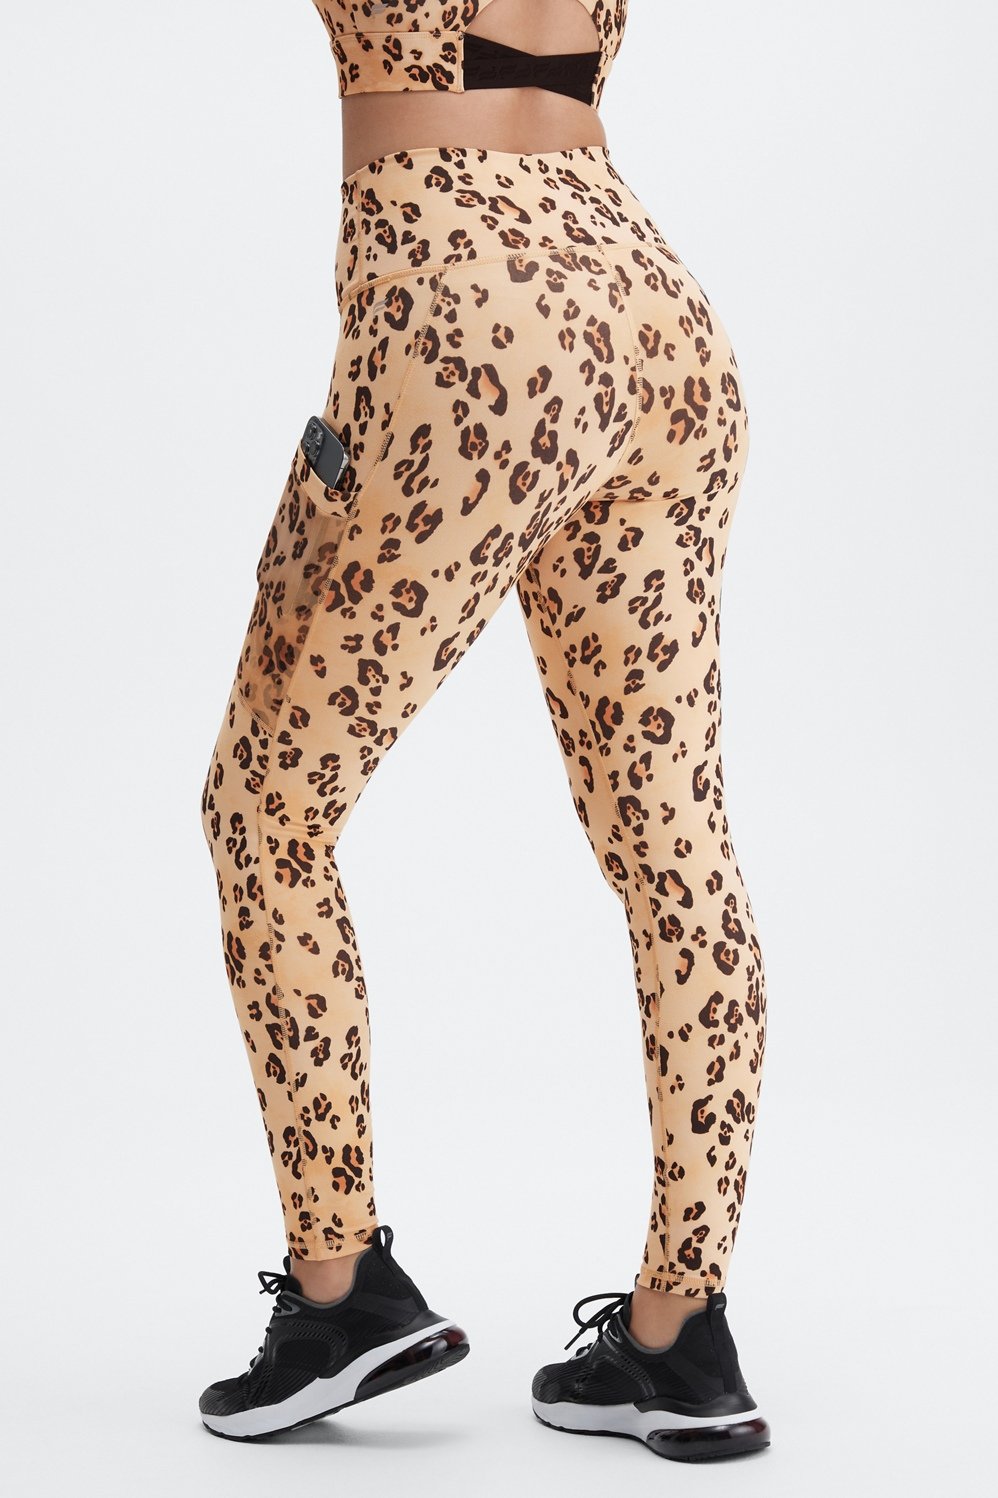 AT Balance High-Rise Leggings for Tall Women in Black Cheetah Print